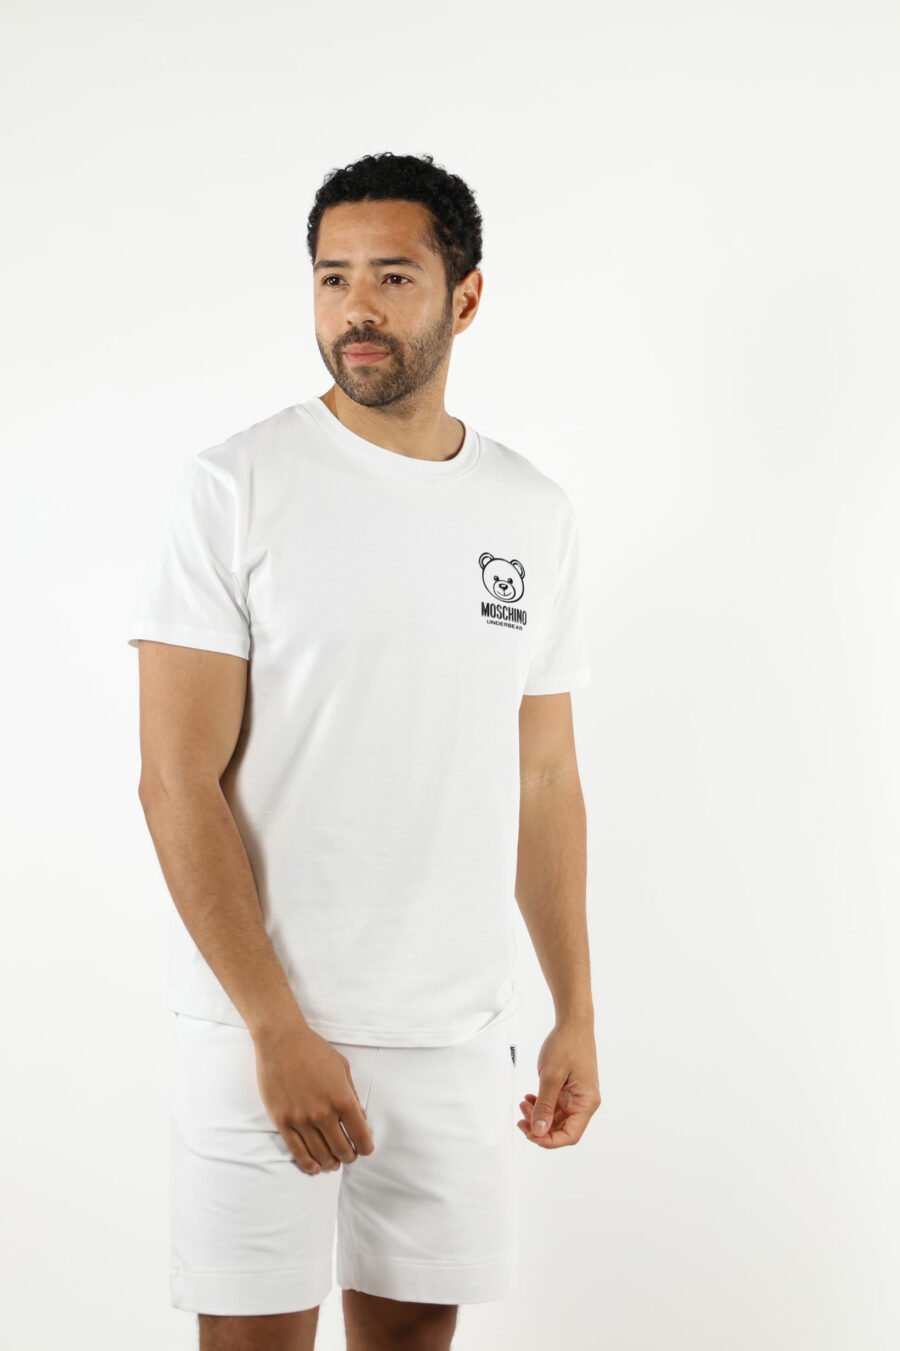 T-Shirt weiß mit Mini-Logo-Bär "Underbear" in schwarzem Gummi - 111030